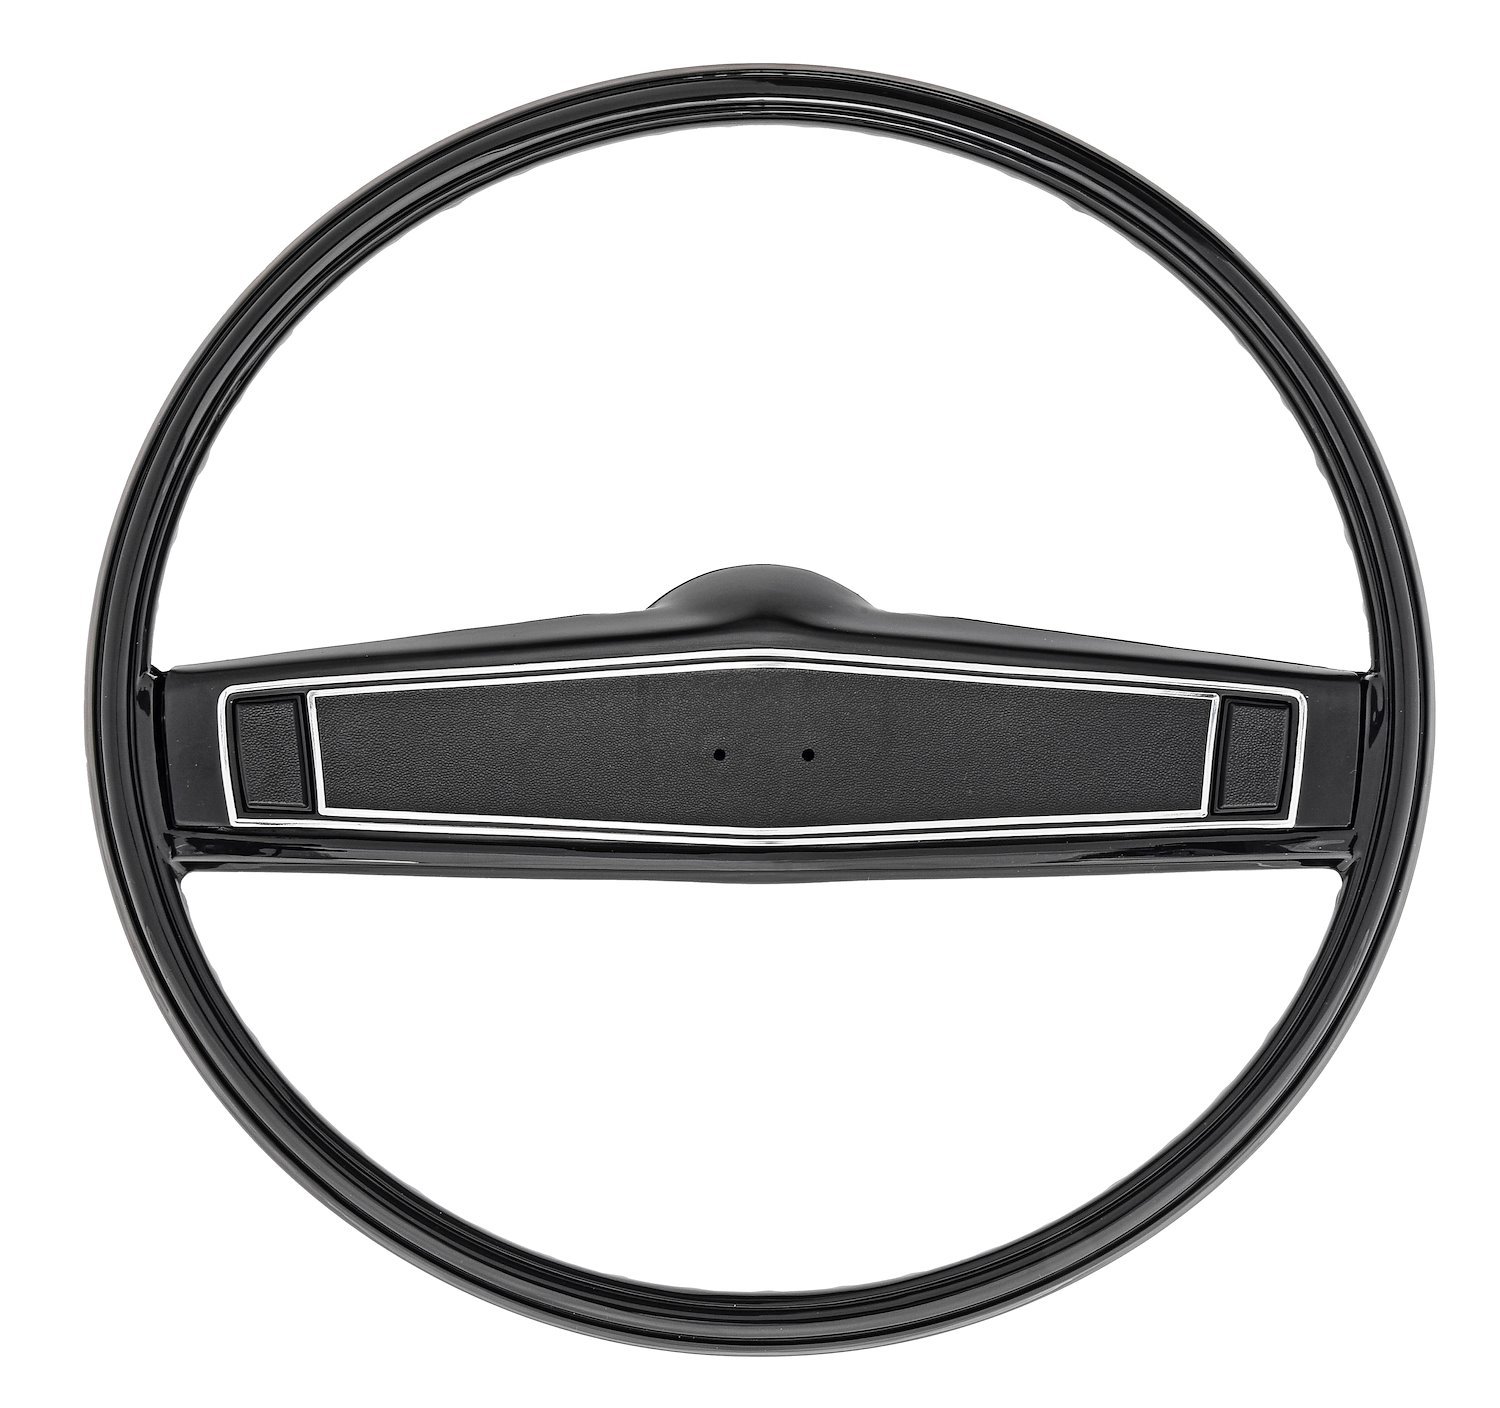 OE Style 2-Spoke Steering Wheel Kit Fits Select 1969-1970 Chevrolet Models [Black]